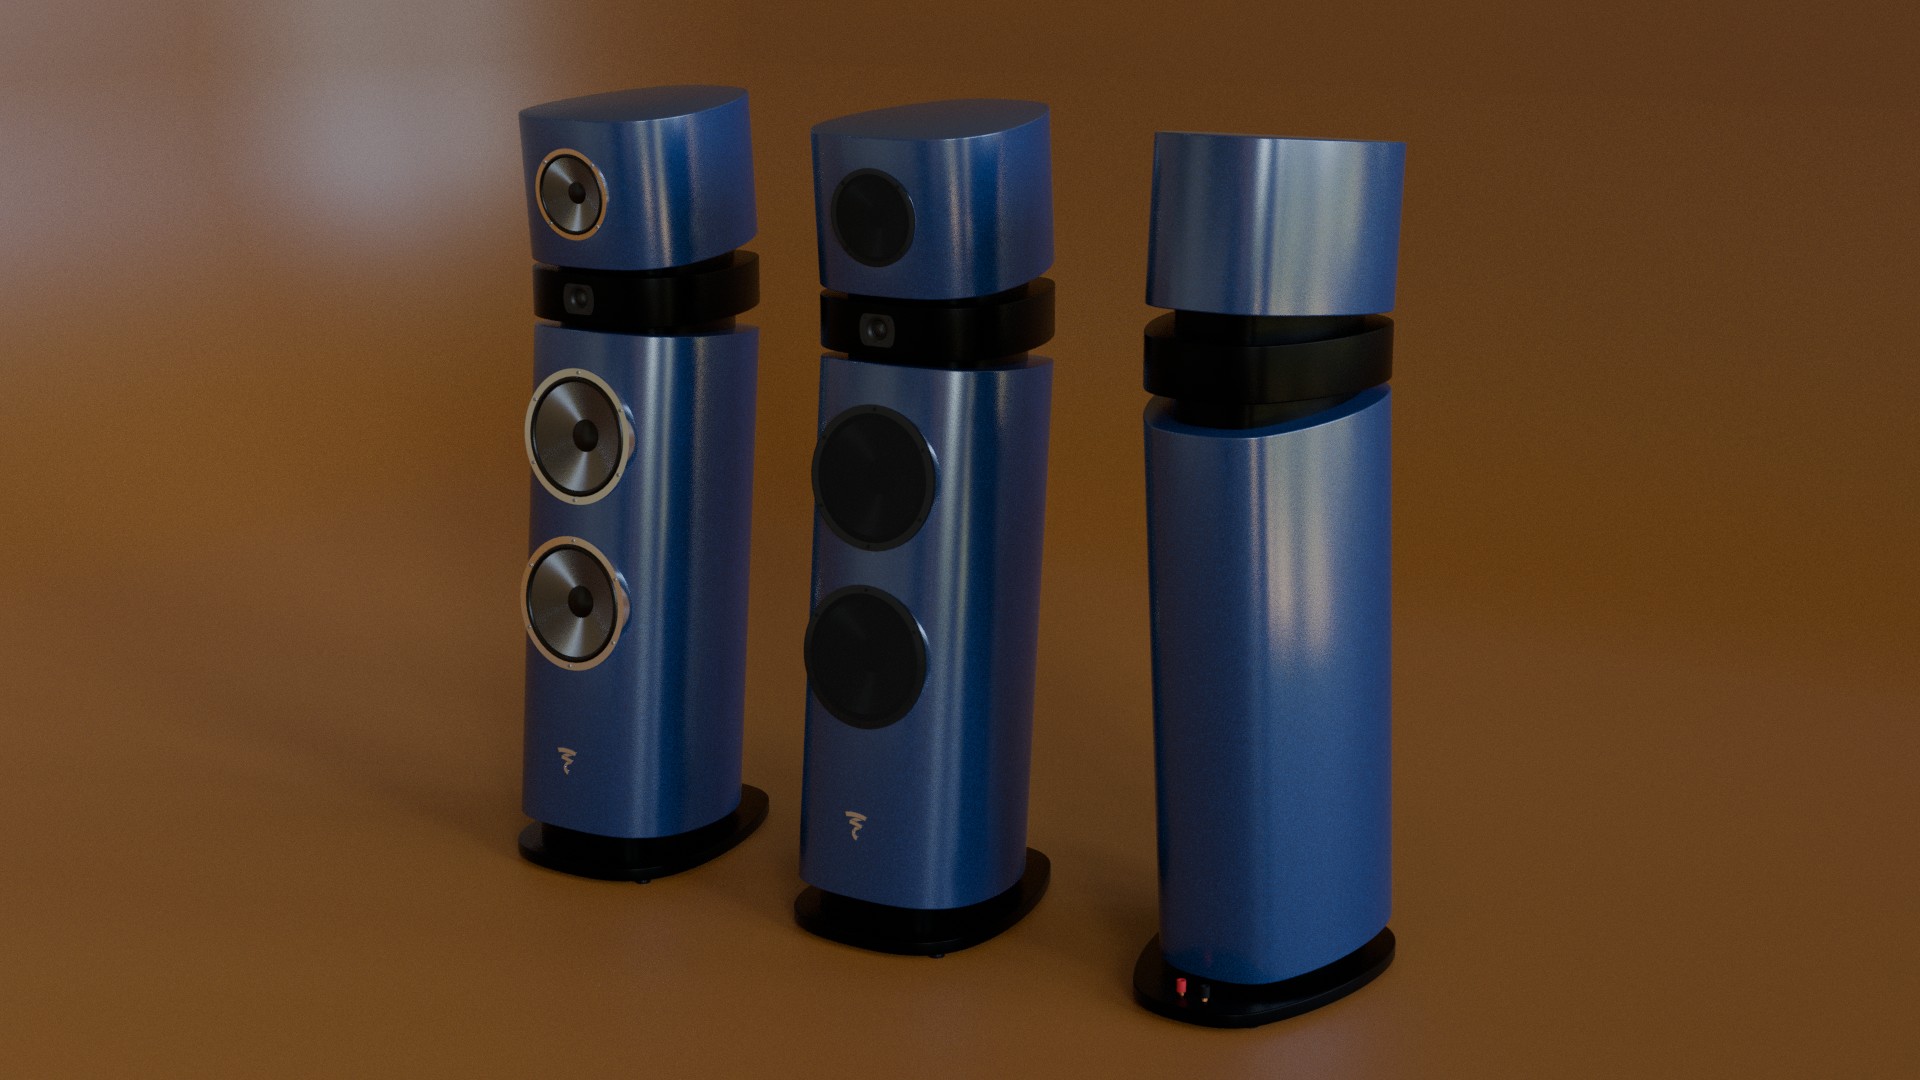 Speaker - Focal preview image 1